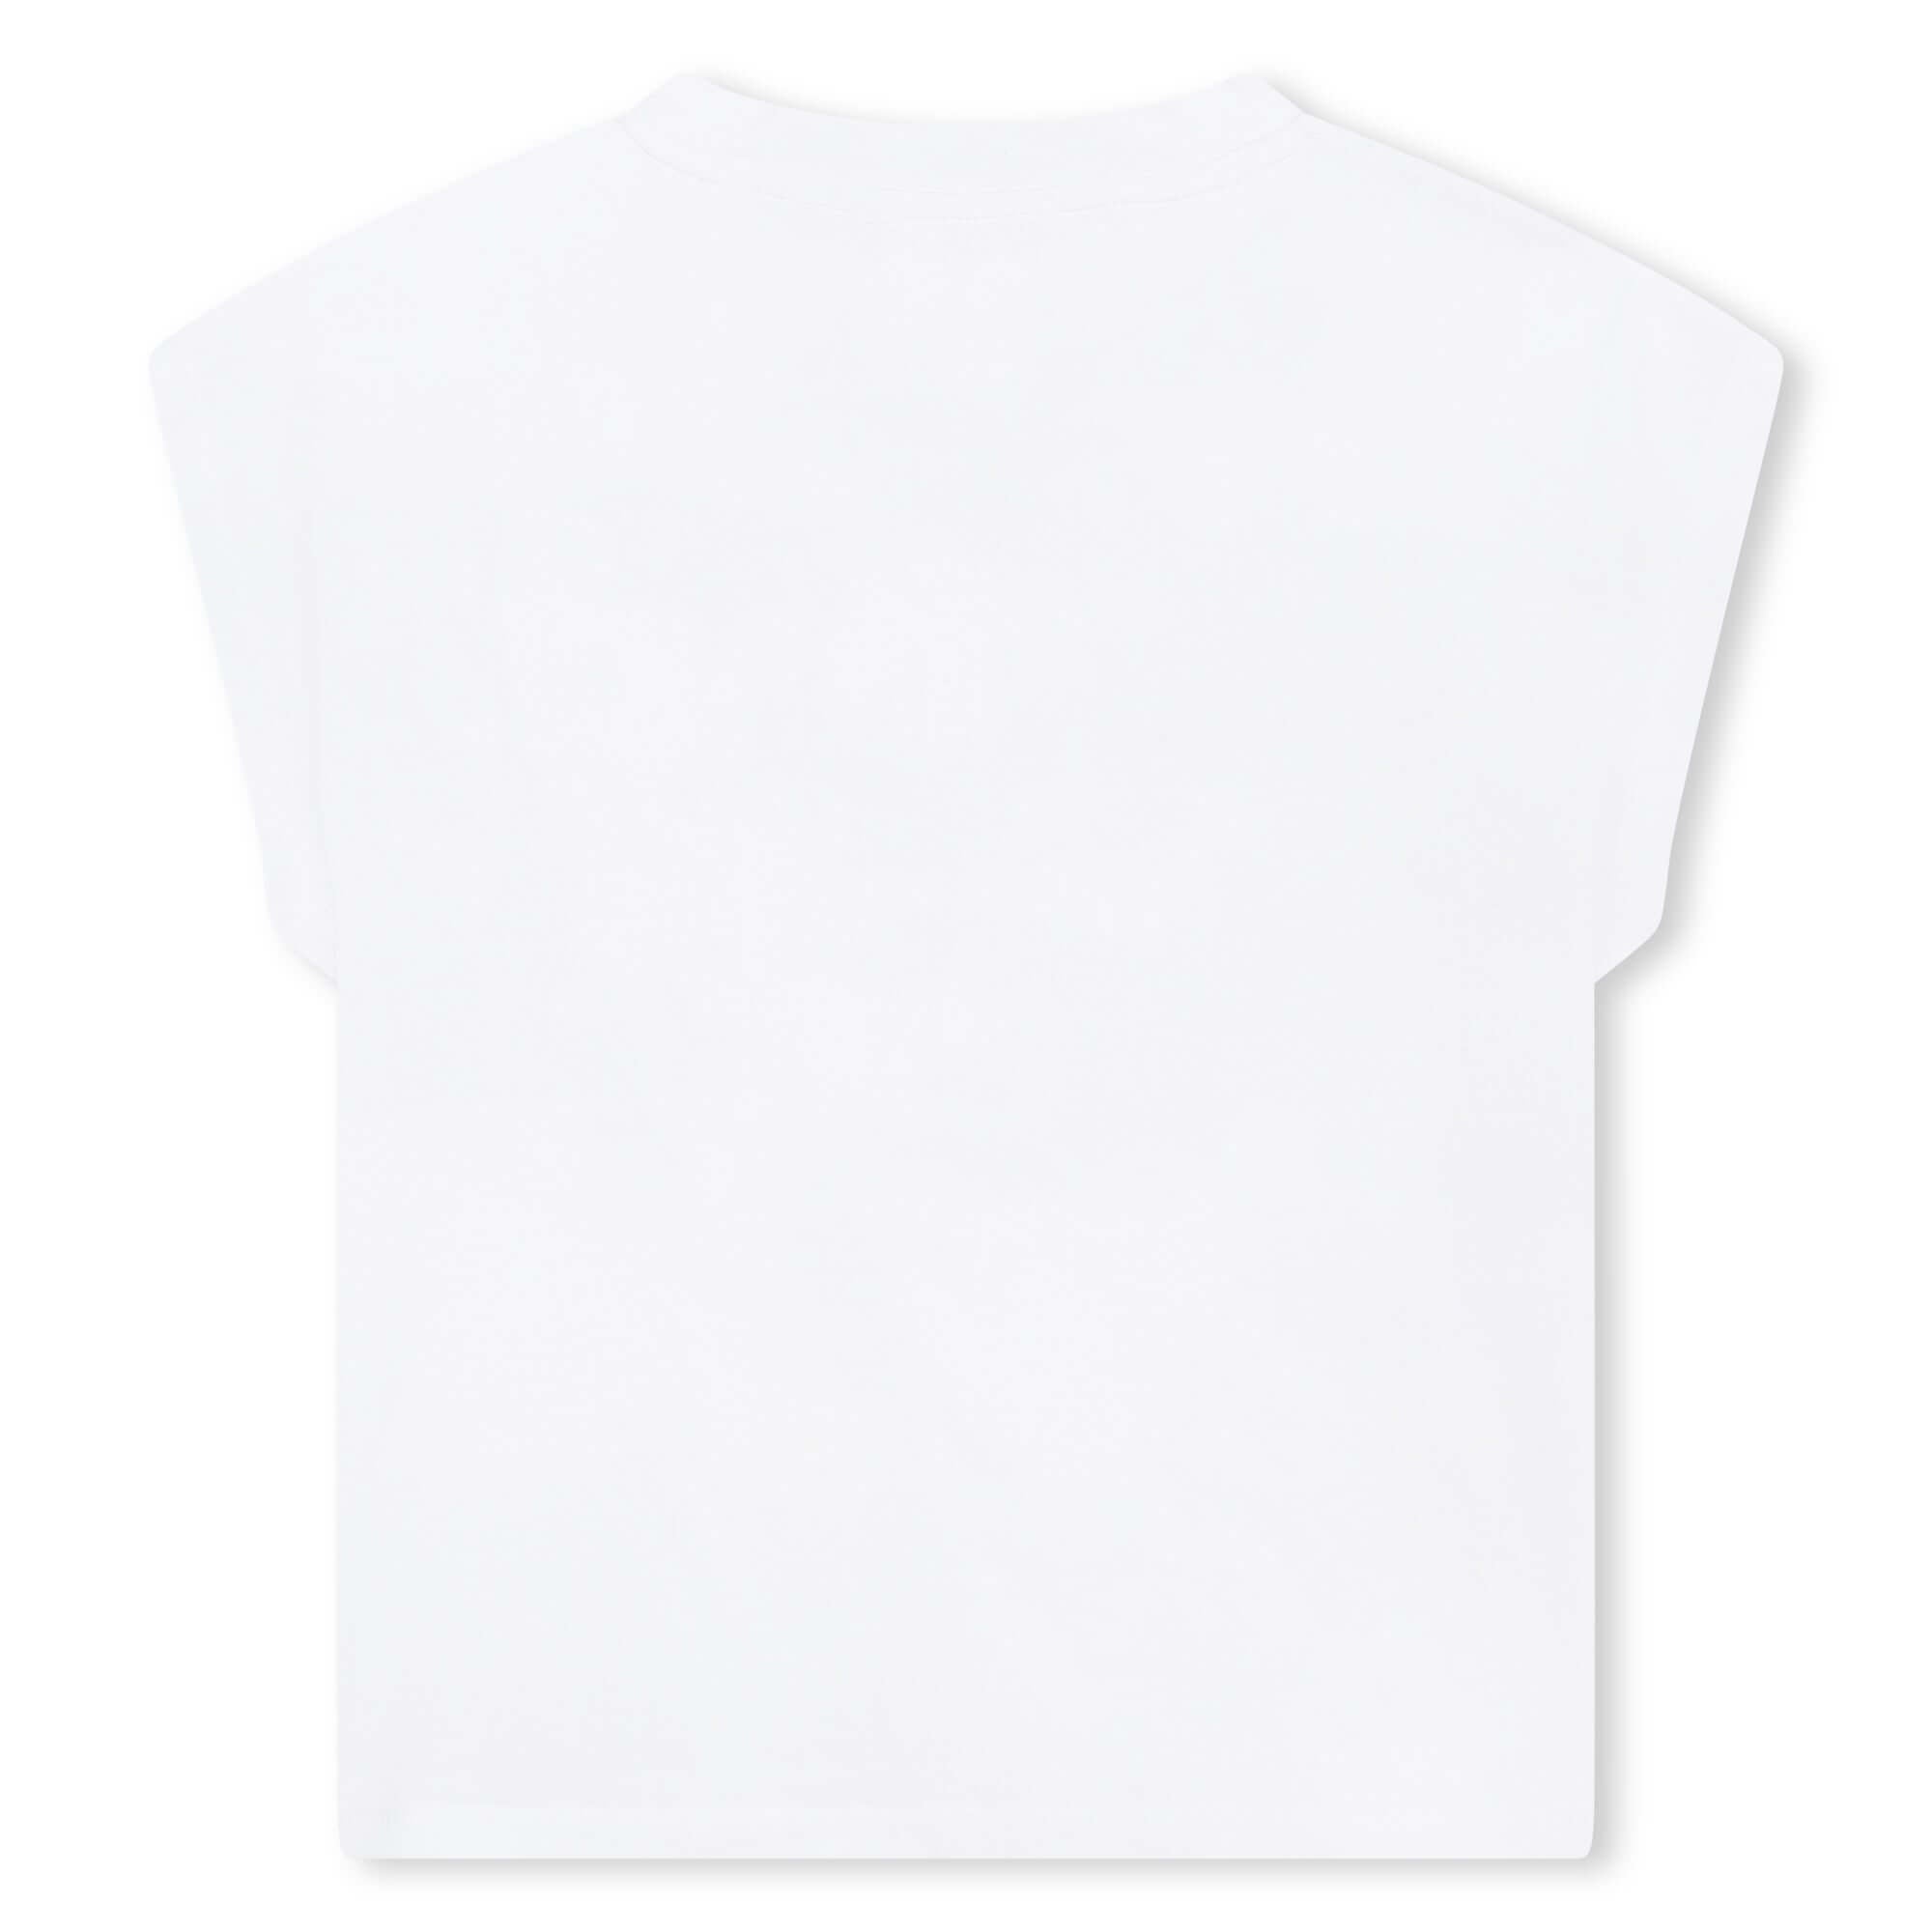 DKNY White & Black Logo T-Shirt